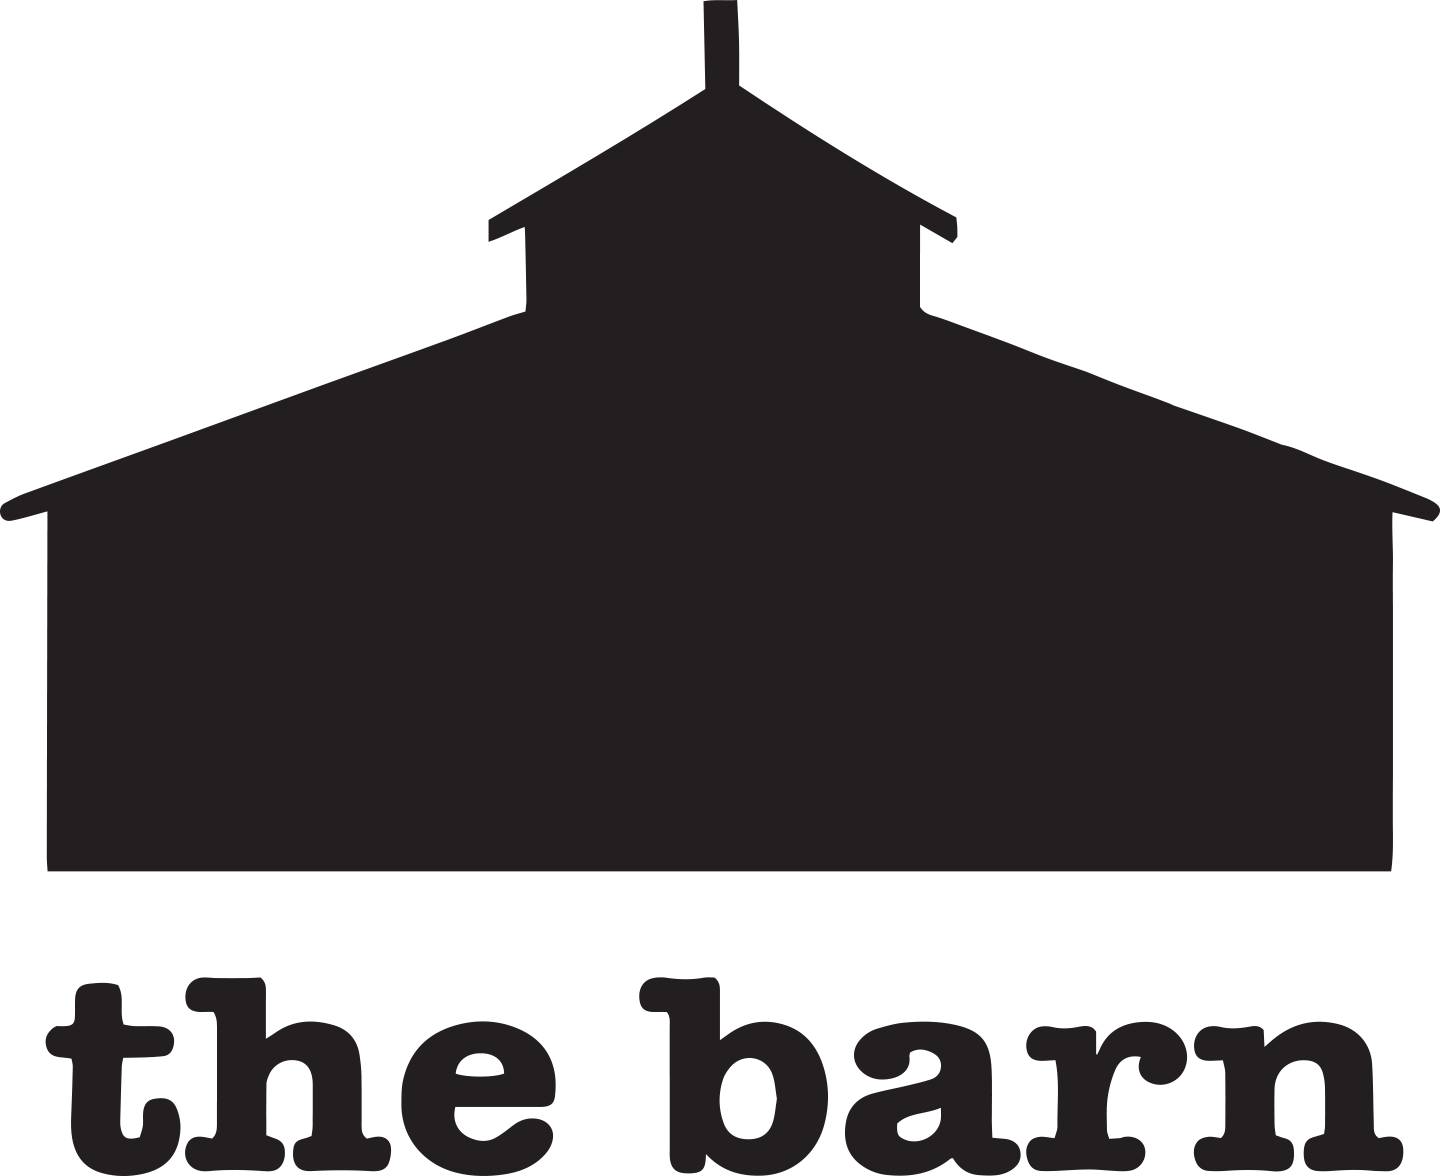 Home The Barn